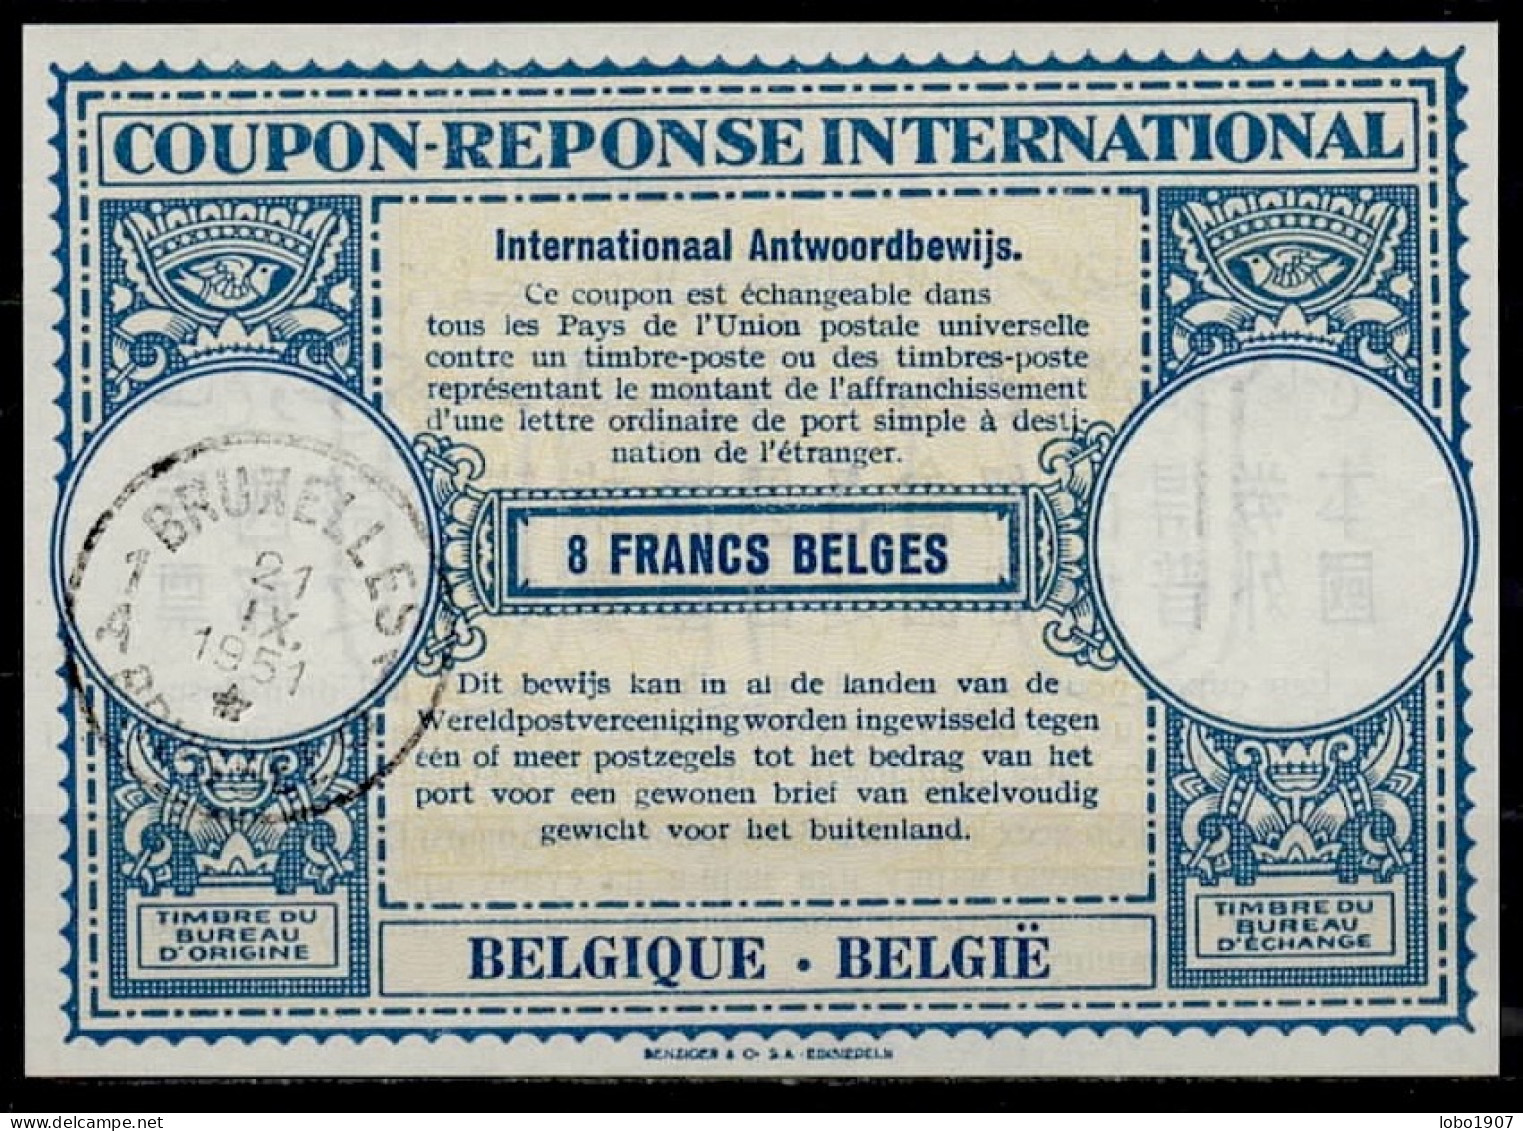 BELGIQUE BELGIE BELGIUM 1951, Lo15  8 FRANCS BELGES International Reply Coupon Reponse Antwortschein IAS IRC  O BRUXELLE - Cupón-respuesta Internacionales